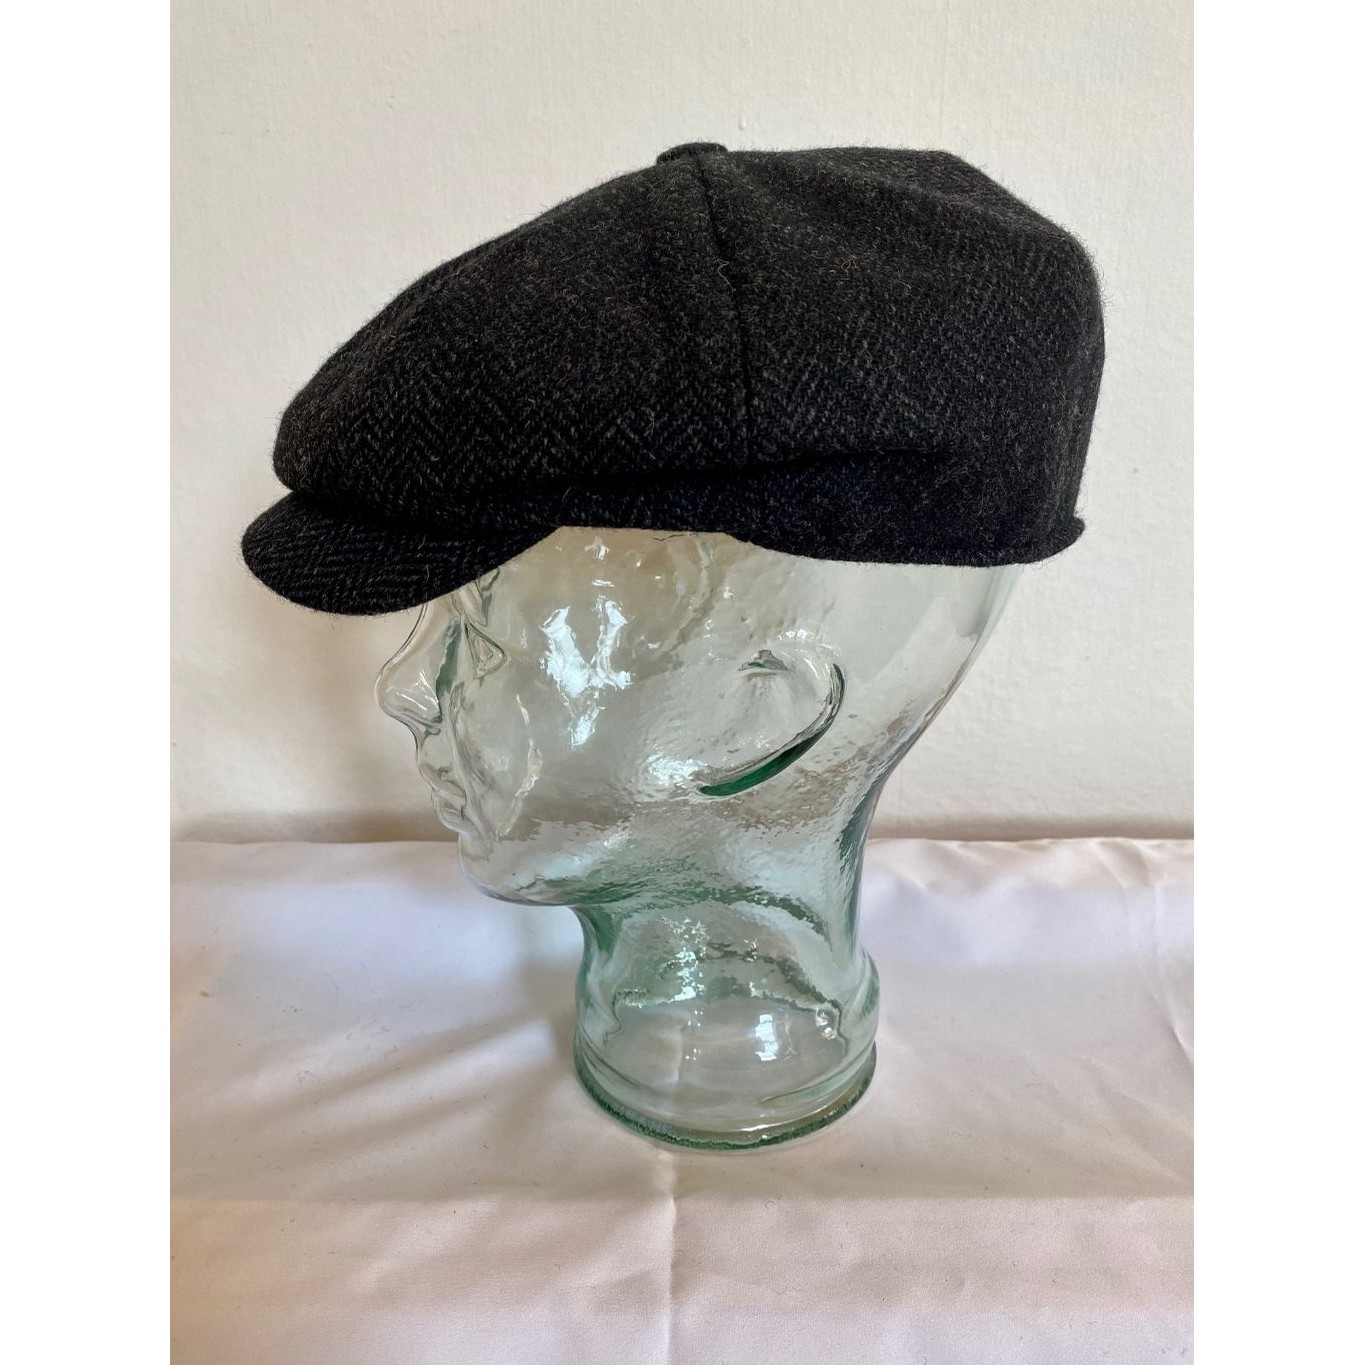 Hanna Hats Peaky Blinder Cap (Black Herringbone) Clothing Caps Hats at ...